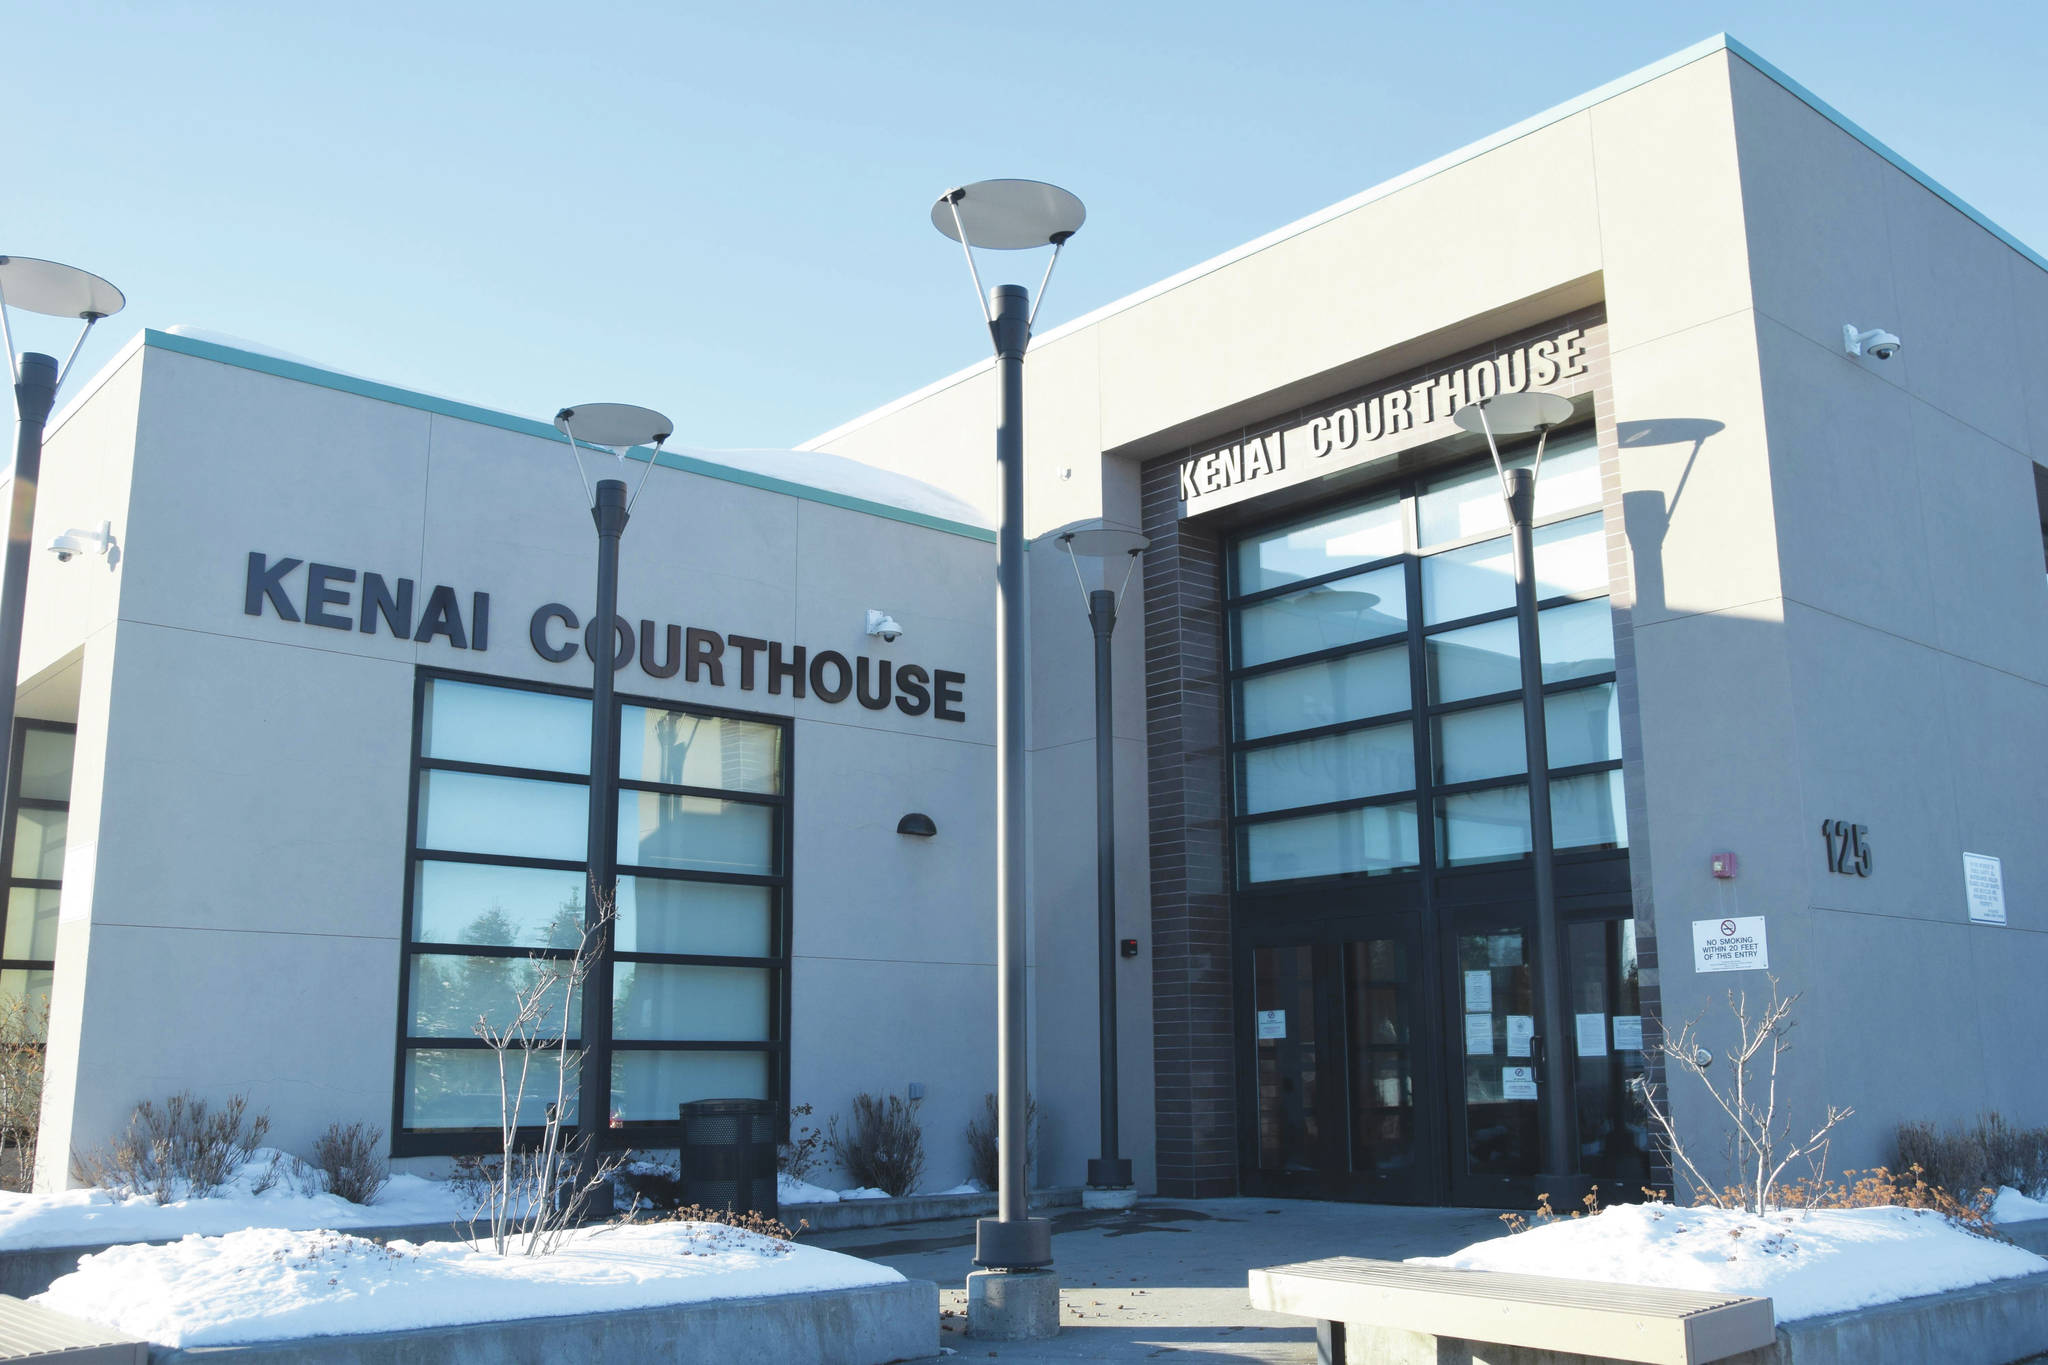 The entrance to the Kenai Courthouse in Kenai, Alaska, photographed on Feb. 26, 2019. (Peninsula Clarion file)